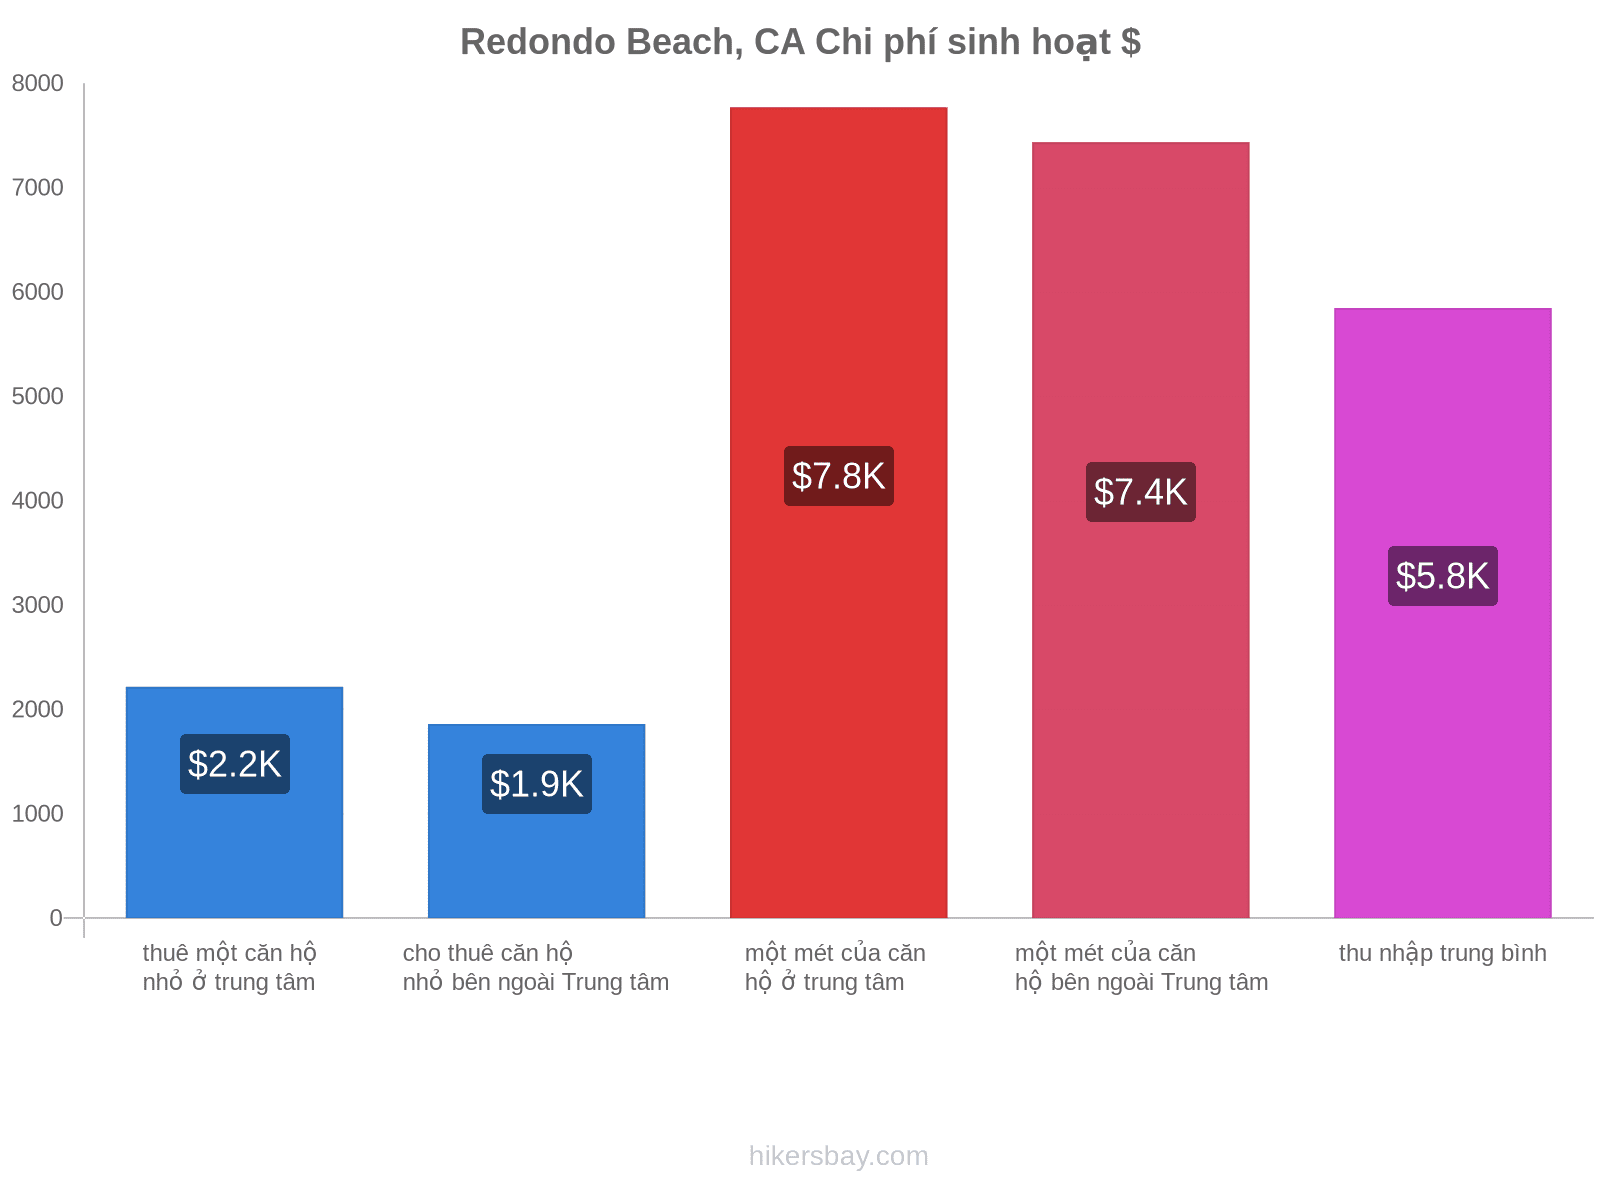 Redondo Beach, CA chi phí sinh hoạt hikersbay.com